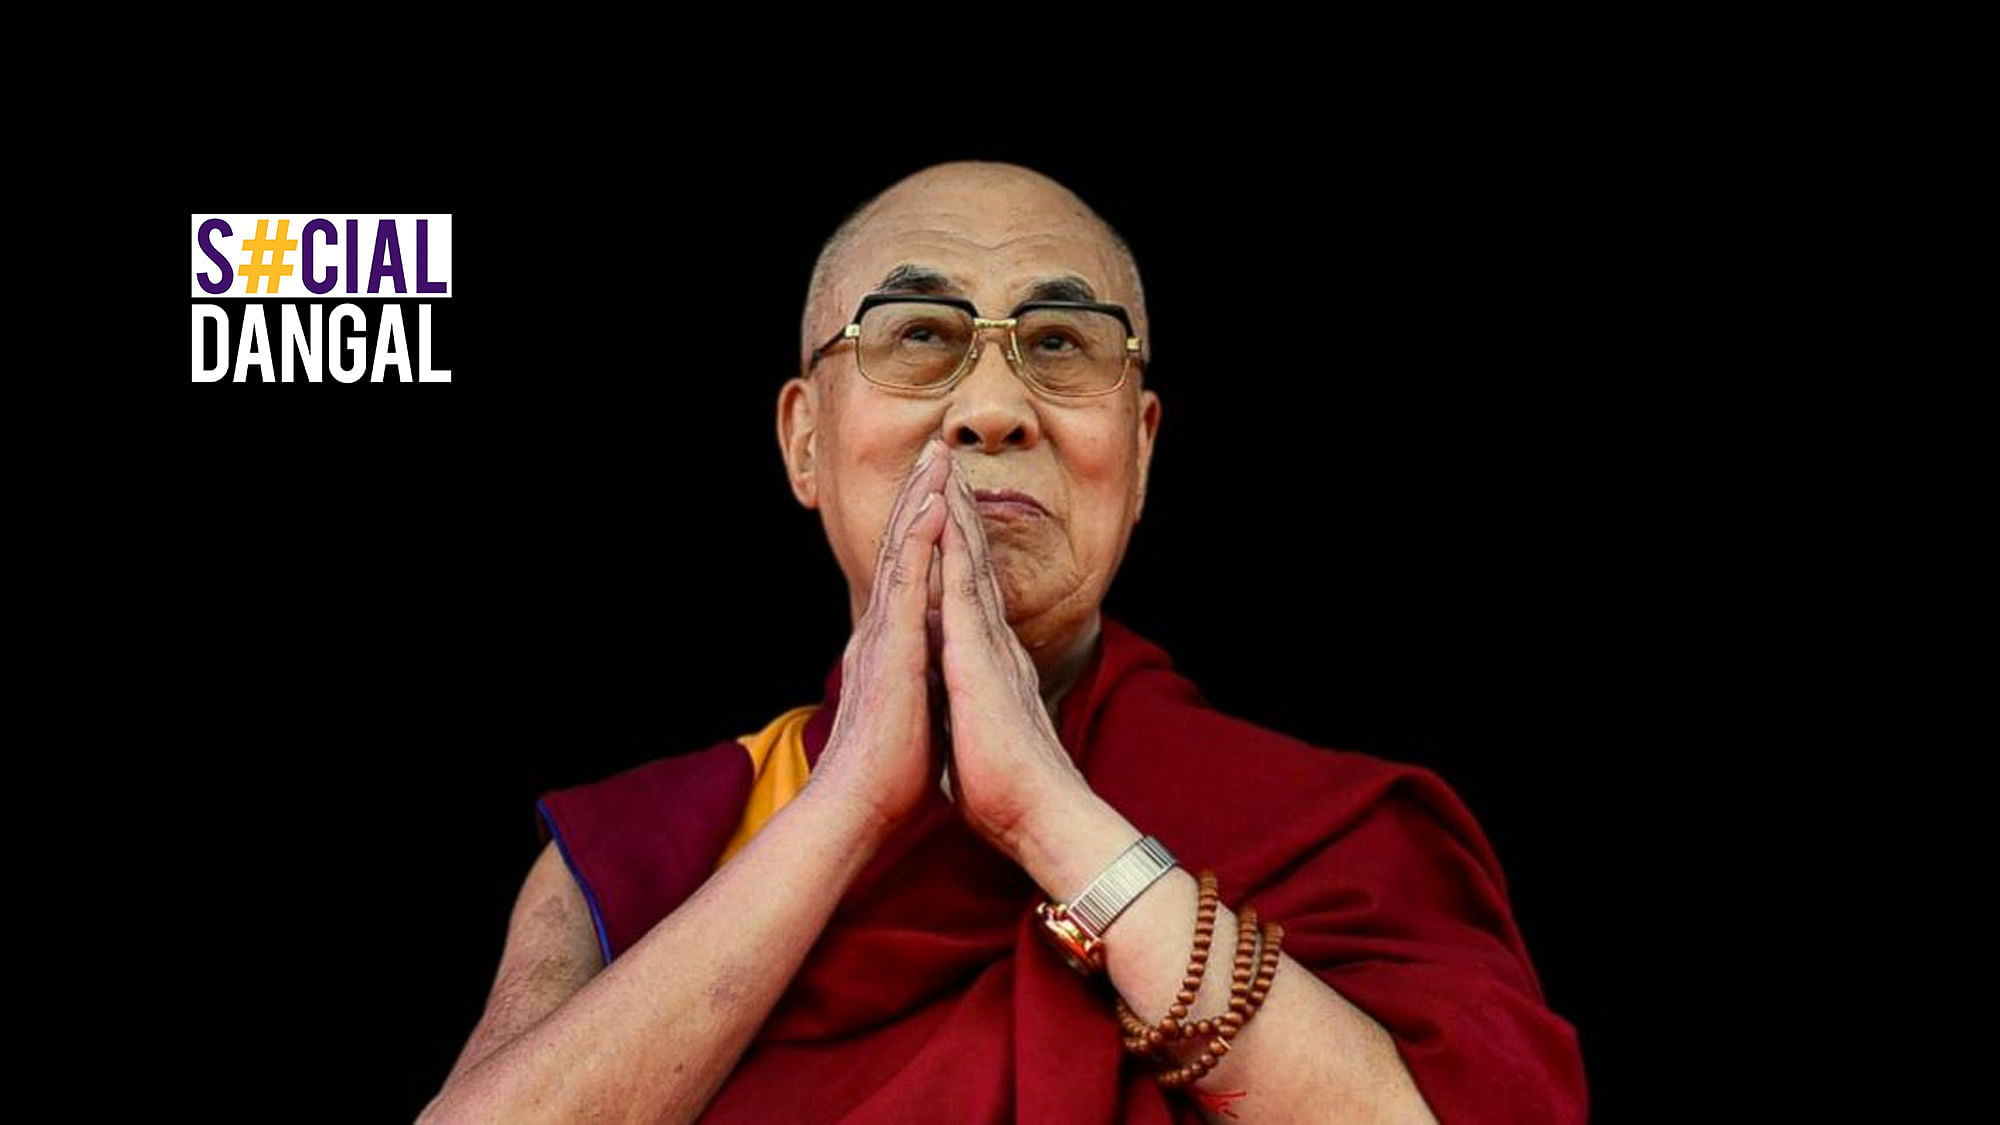 Dalai Lama spoke to the BBC about a range of topics.